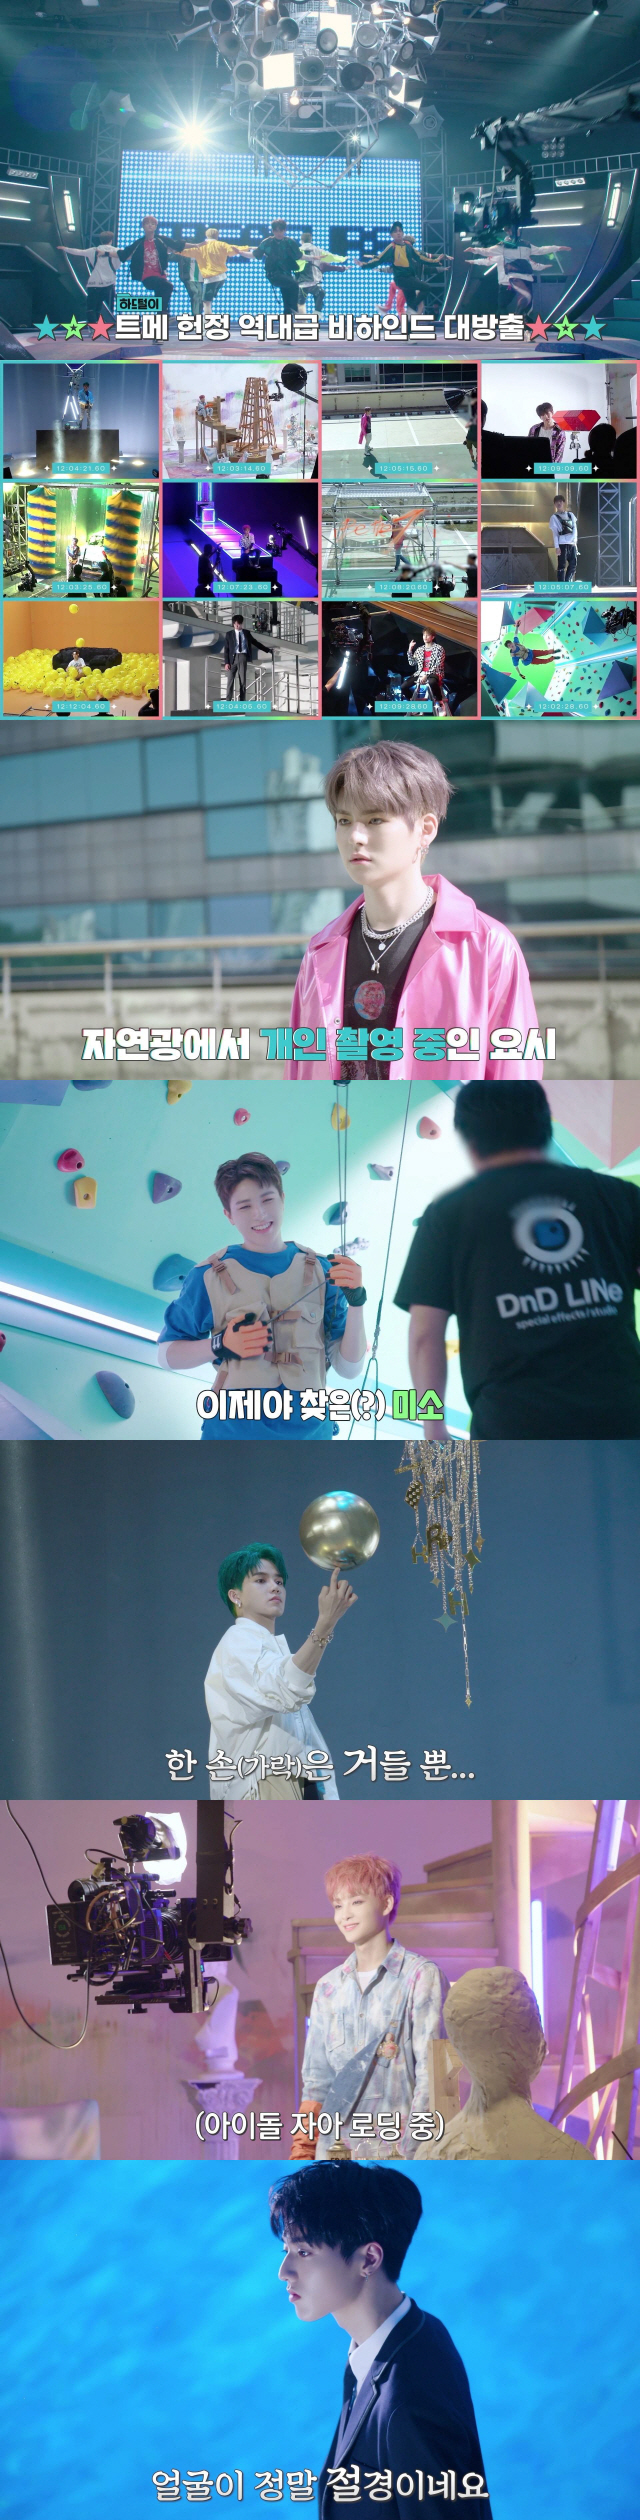 'YG 대형 신인' 트레저, 데뷔곡 'BOY' MV 촬영장 비하인드 공개